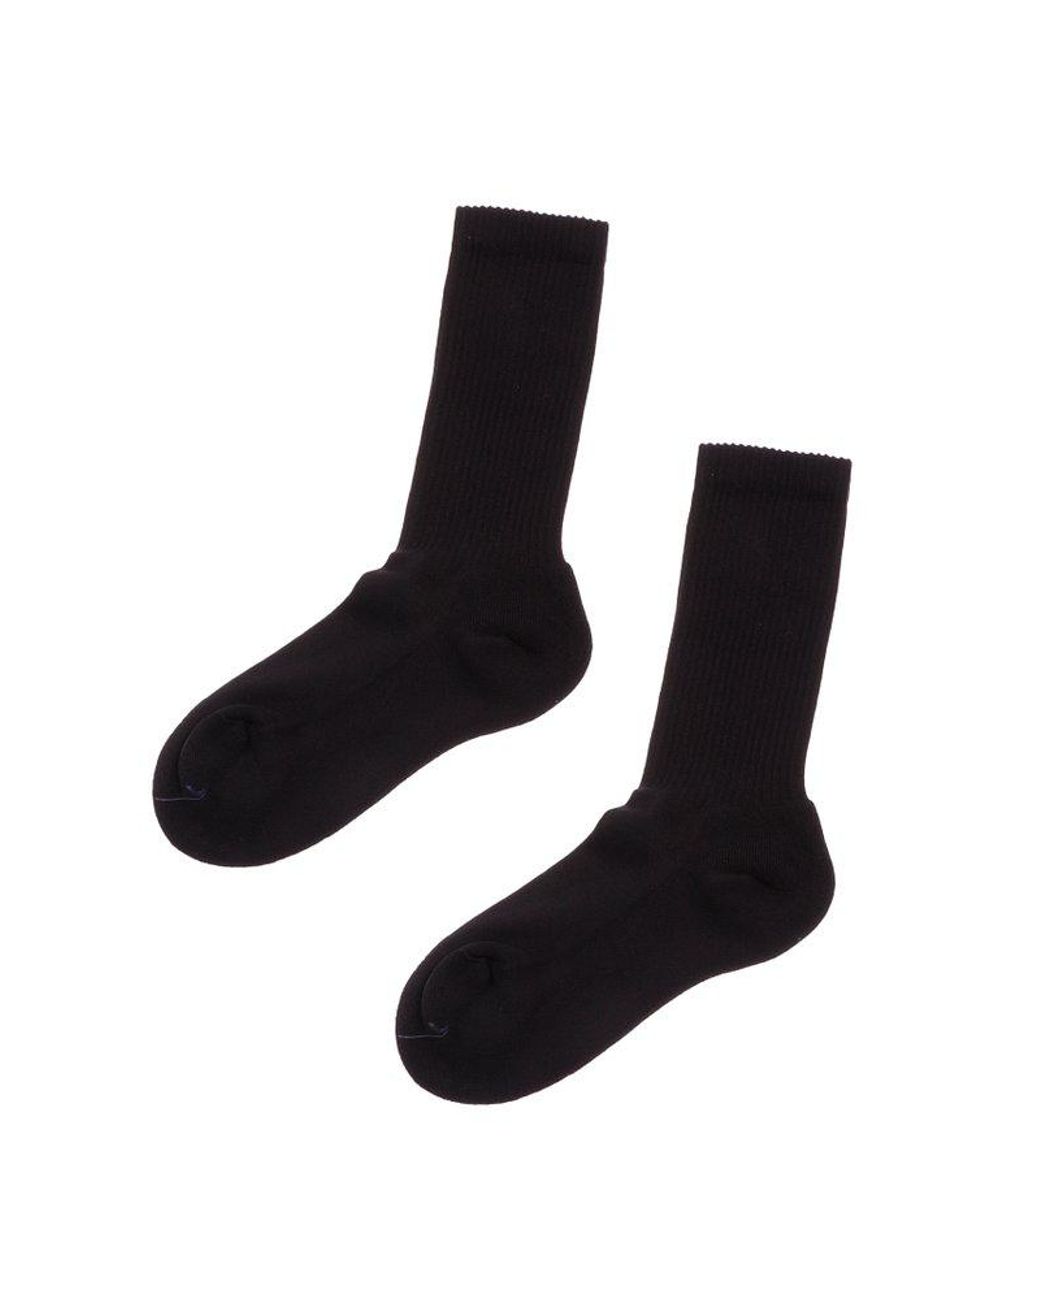 Jacquemus Les Chaussettes Socks in Black | Lyst